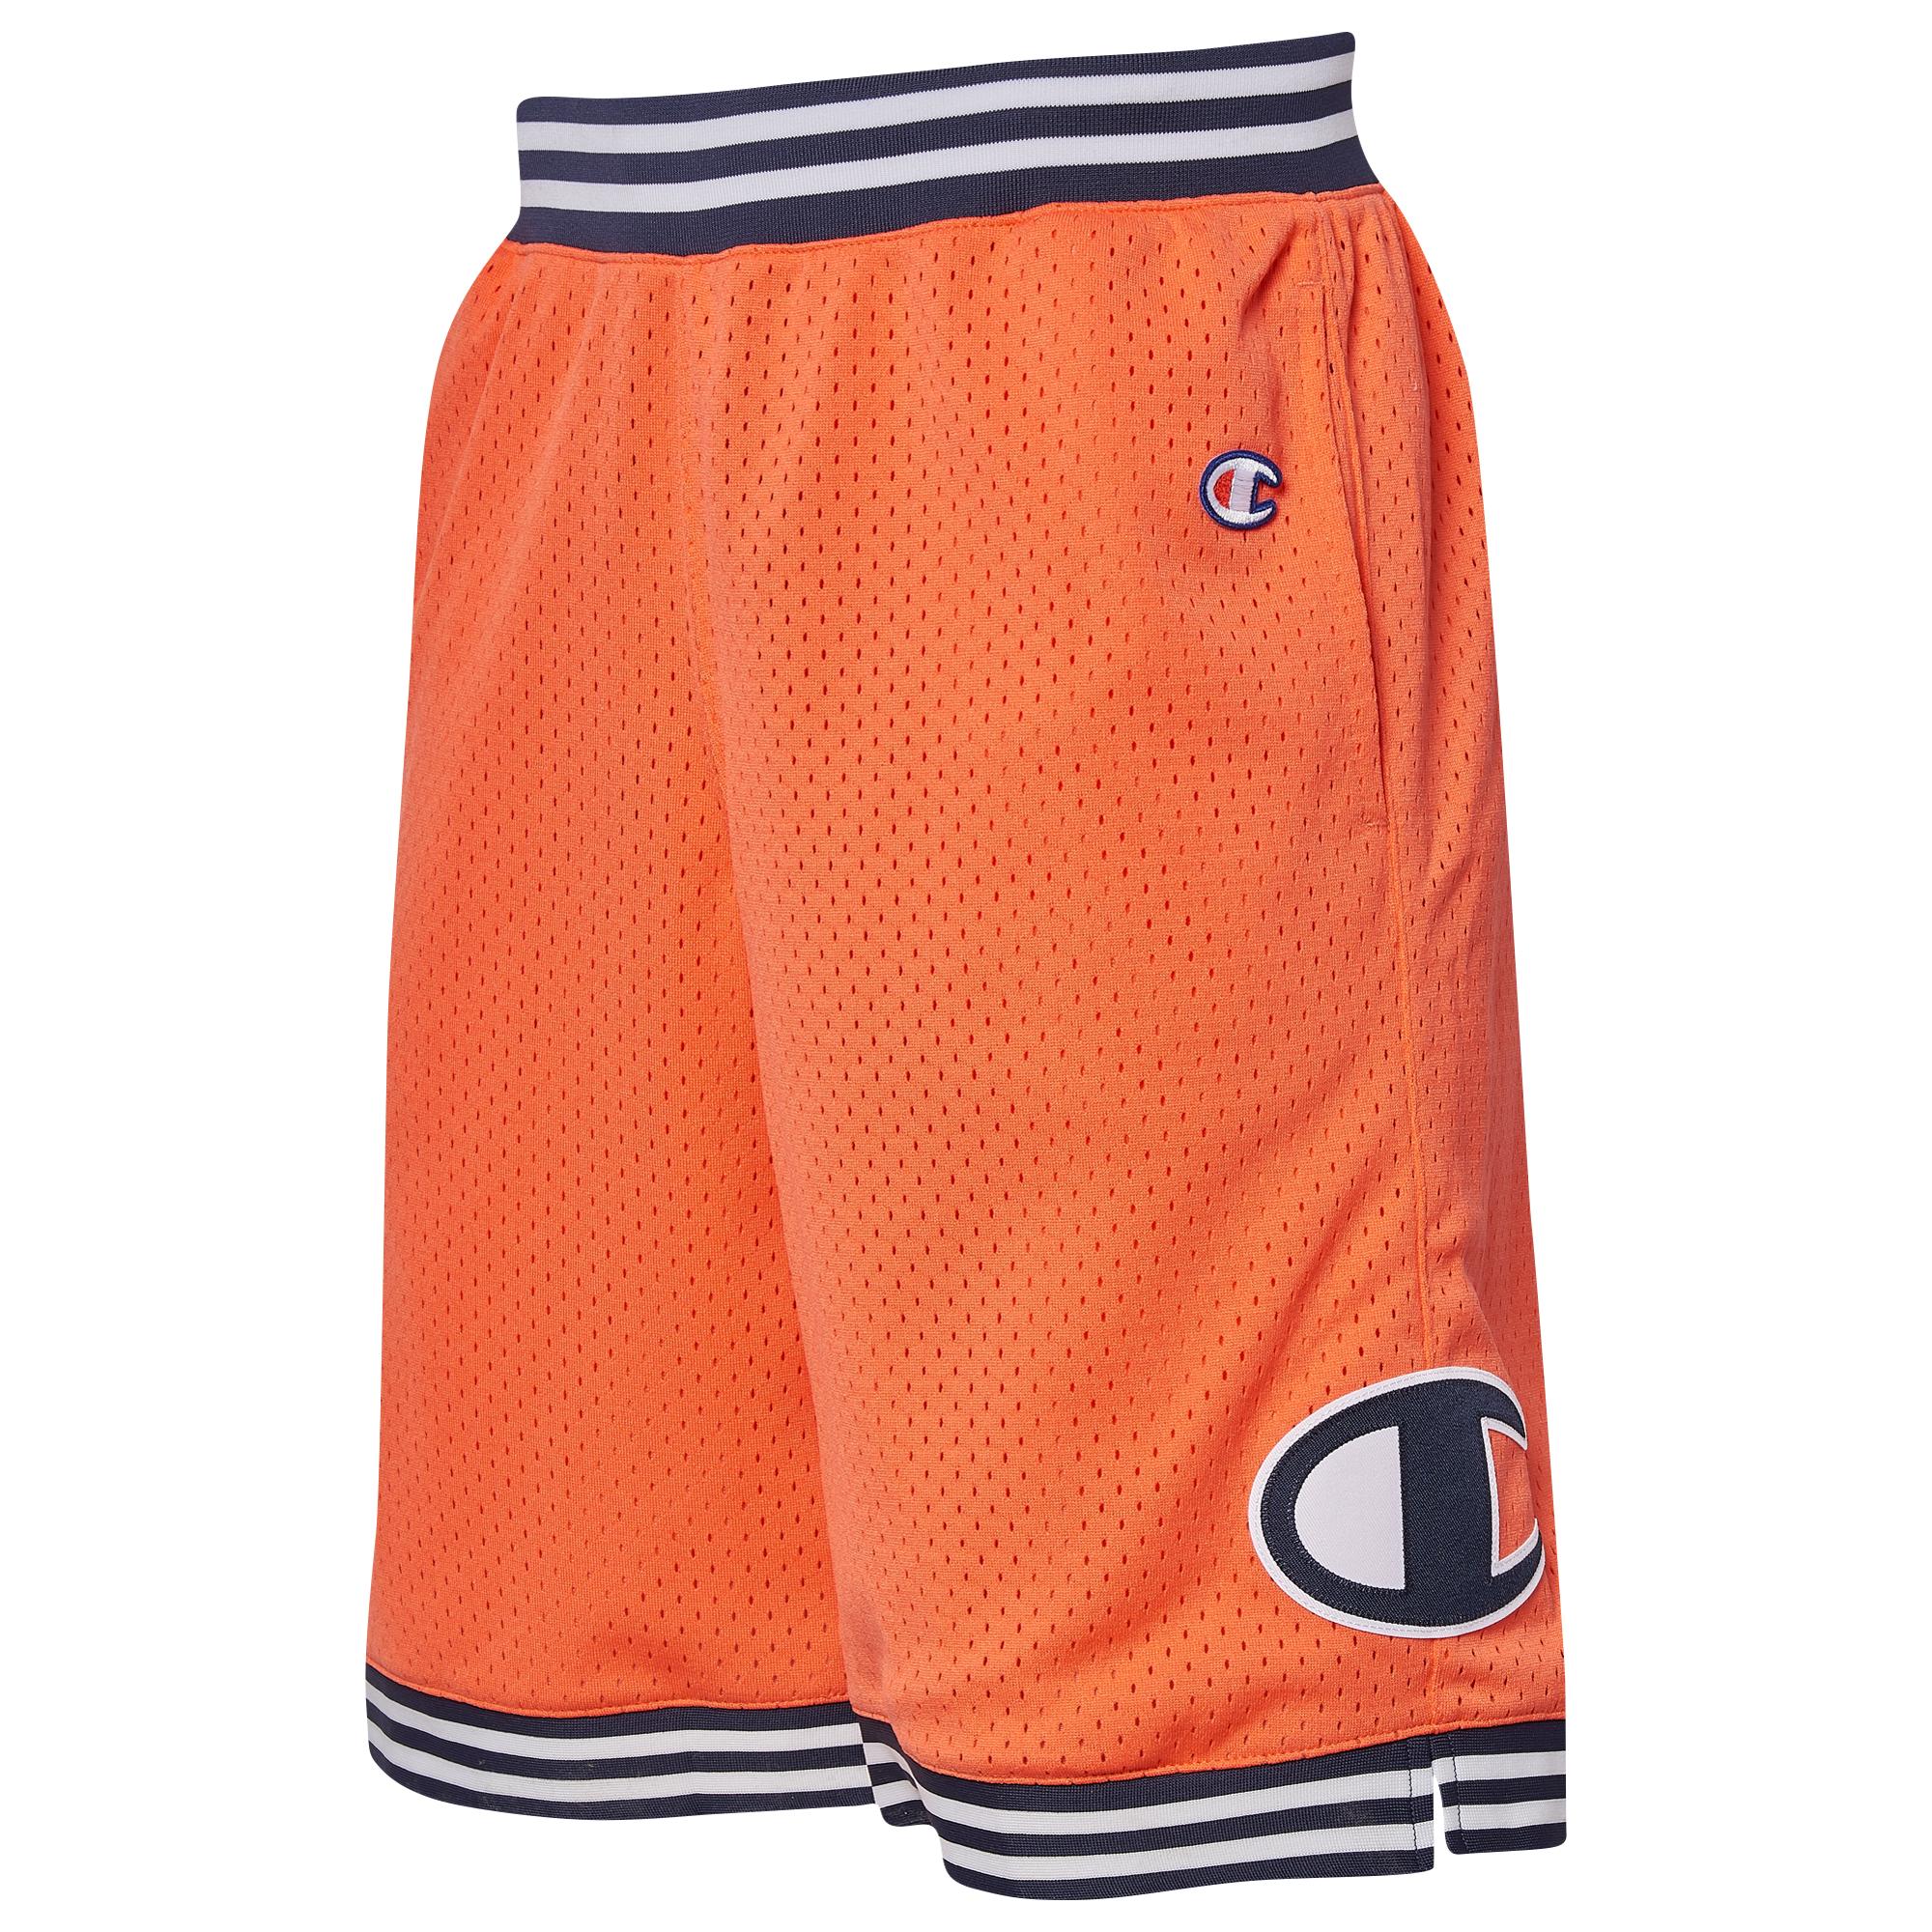 papaya champion shorts